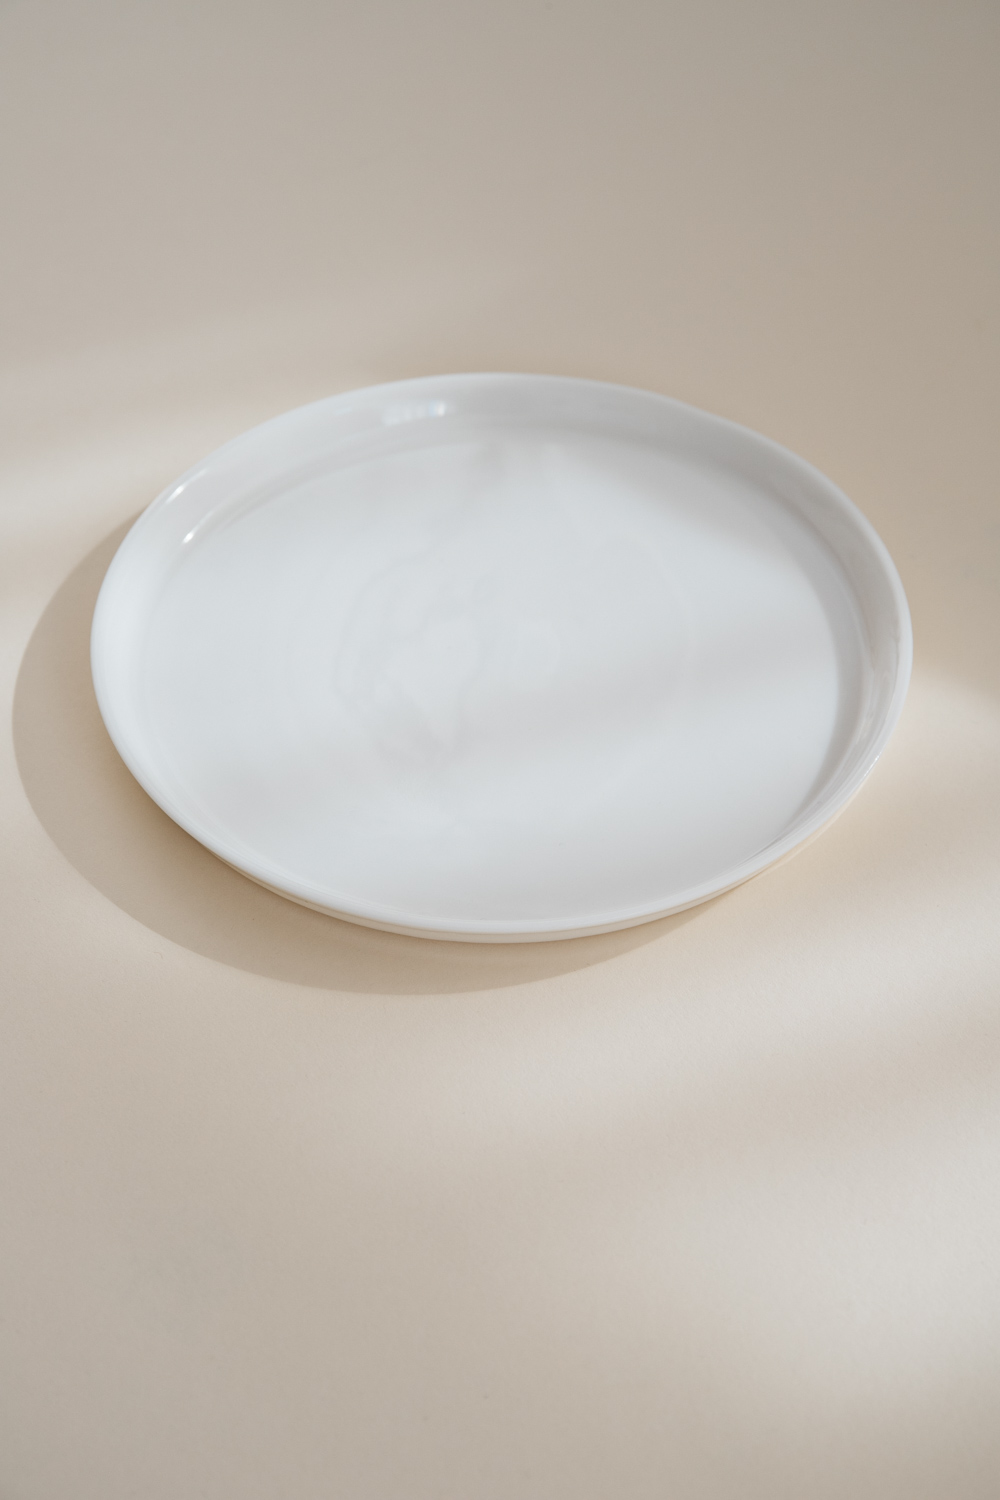 Handmade Porcelain Plate - Medium